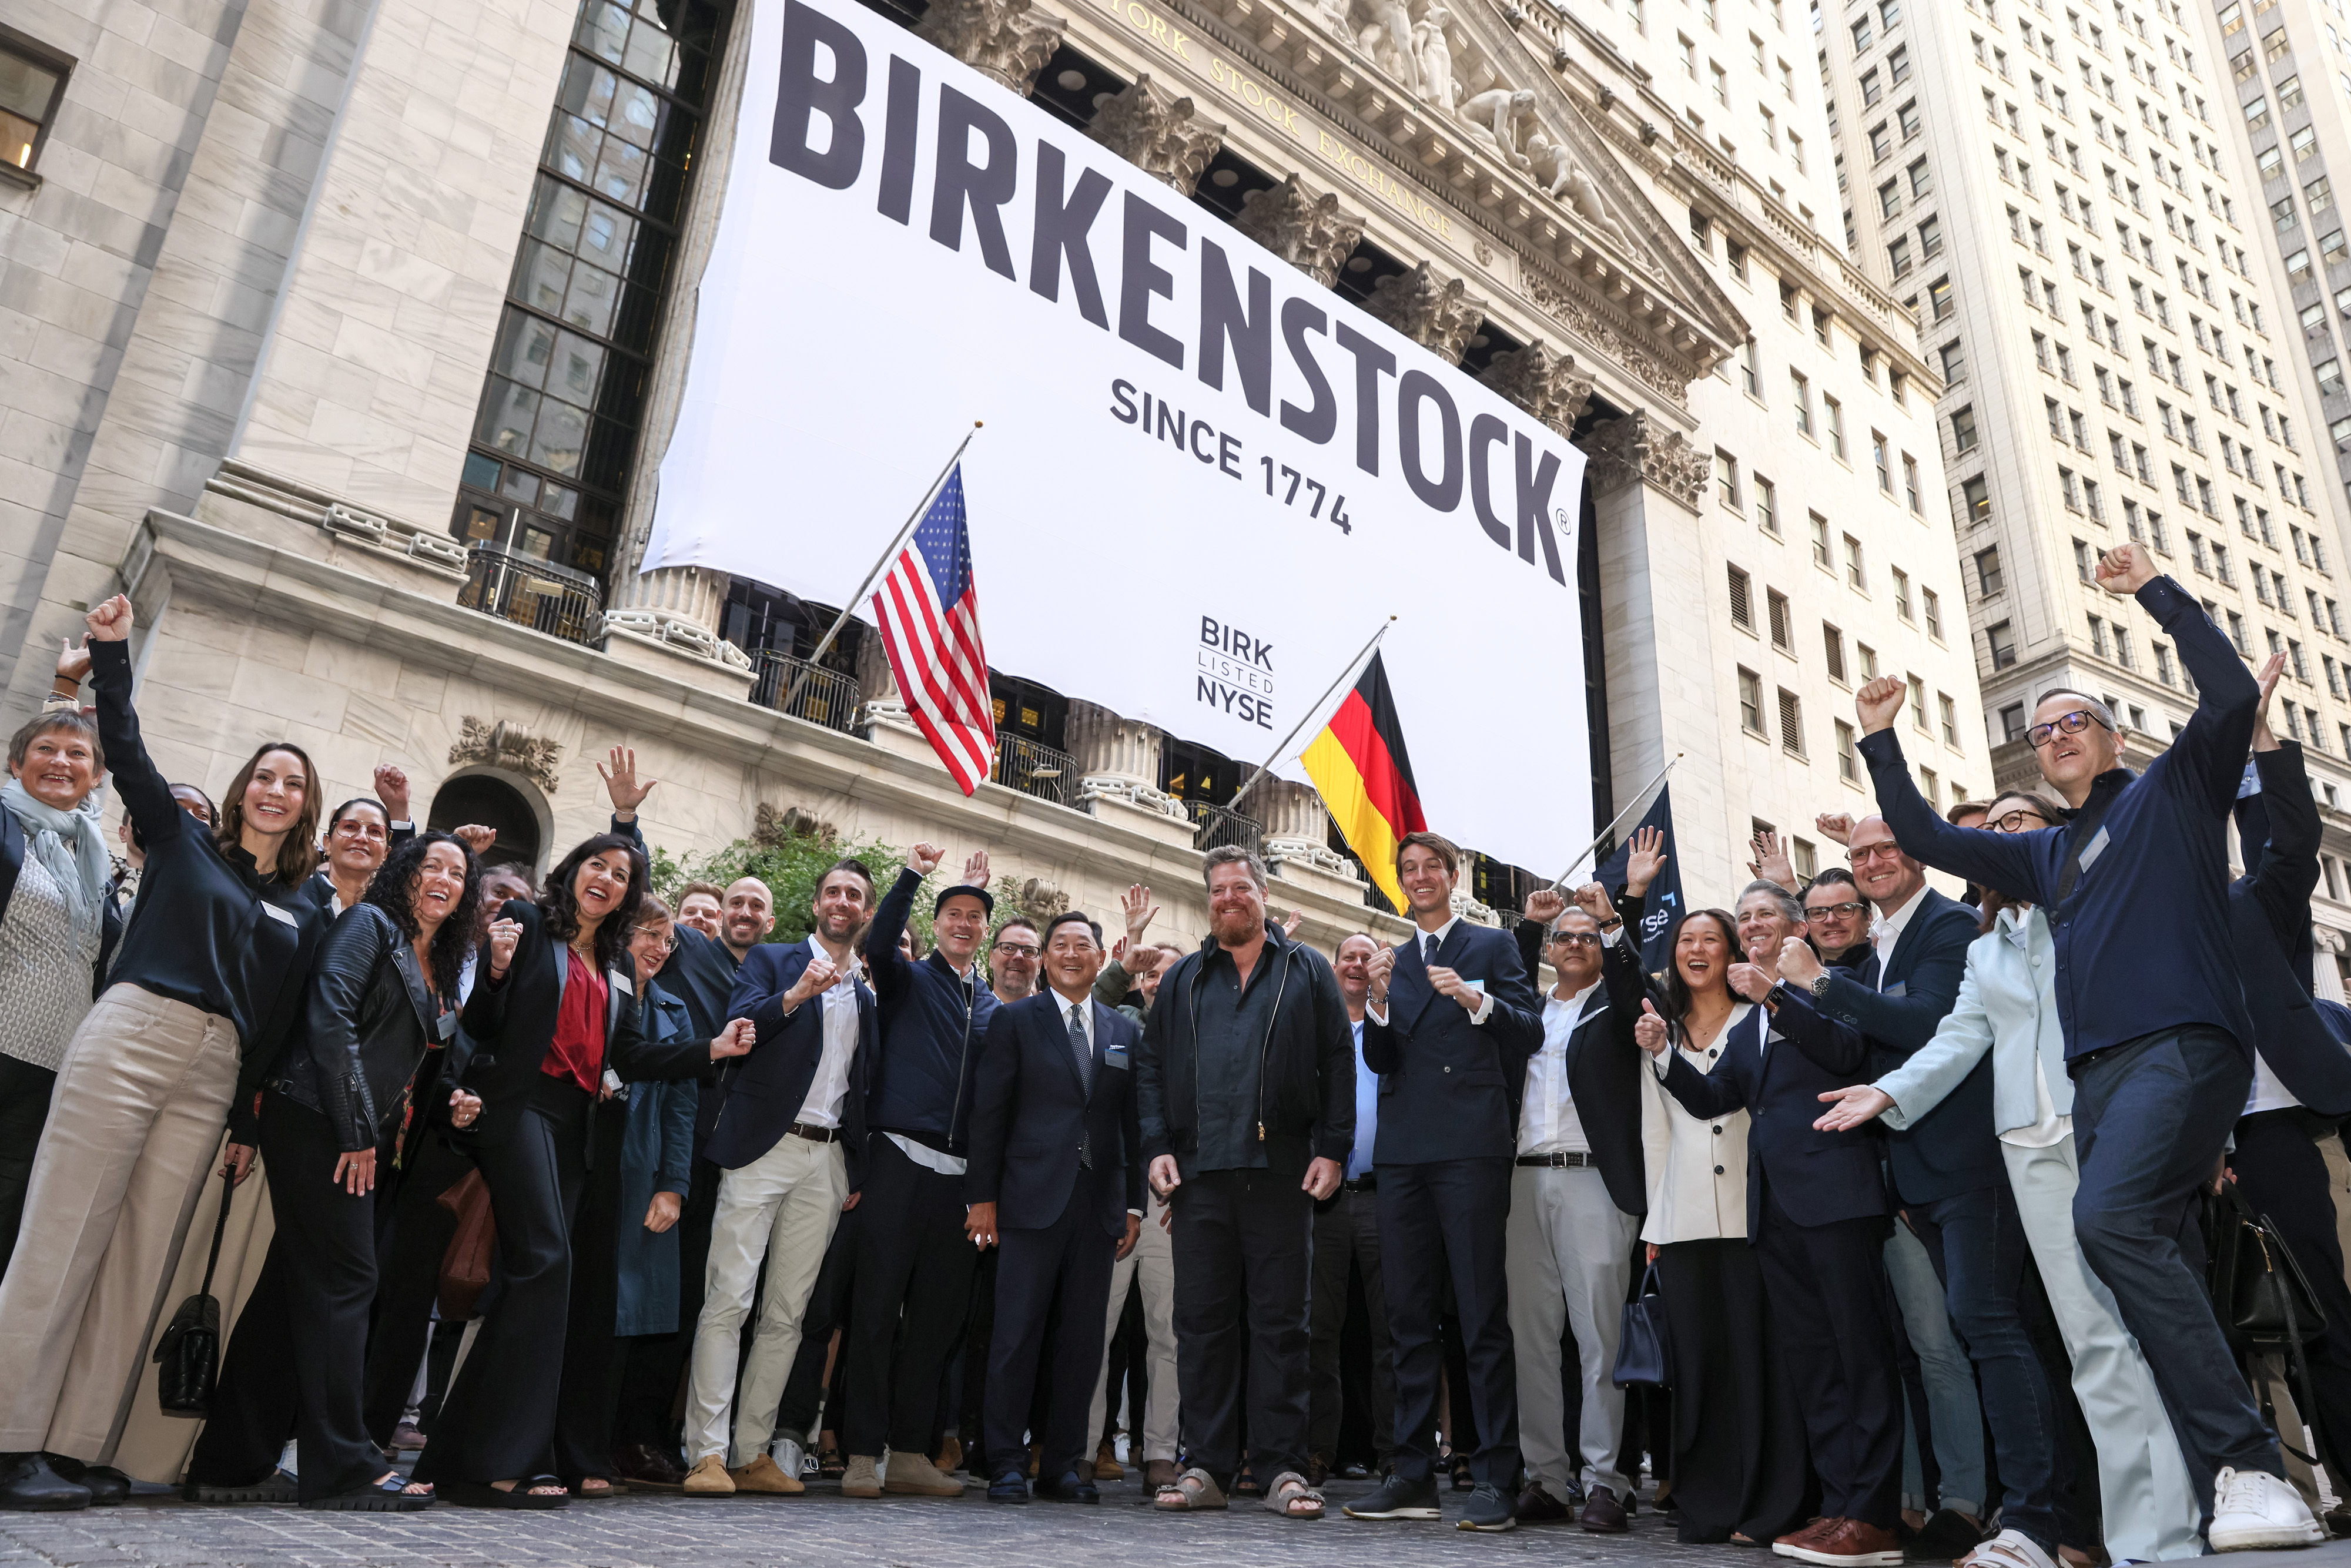 Birkenstock readies for IPO, seeks $9.2 billion valuation